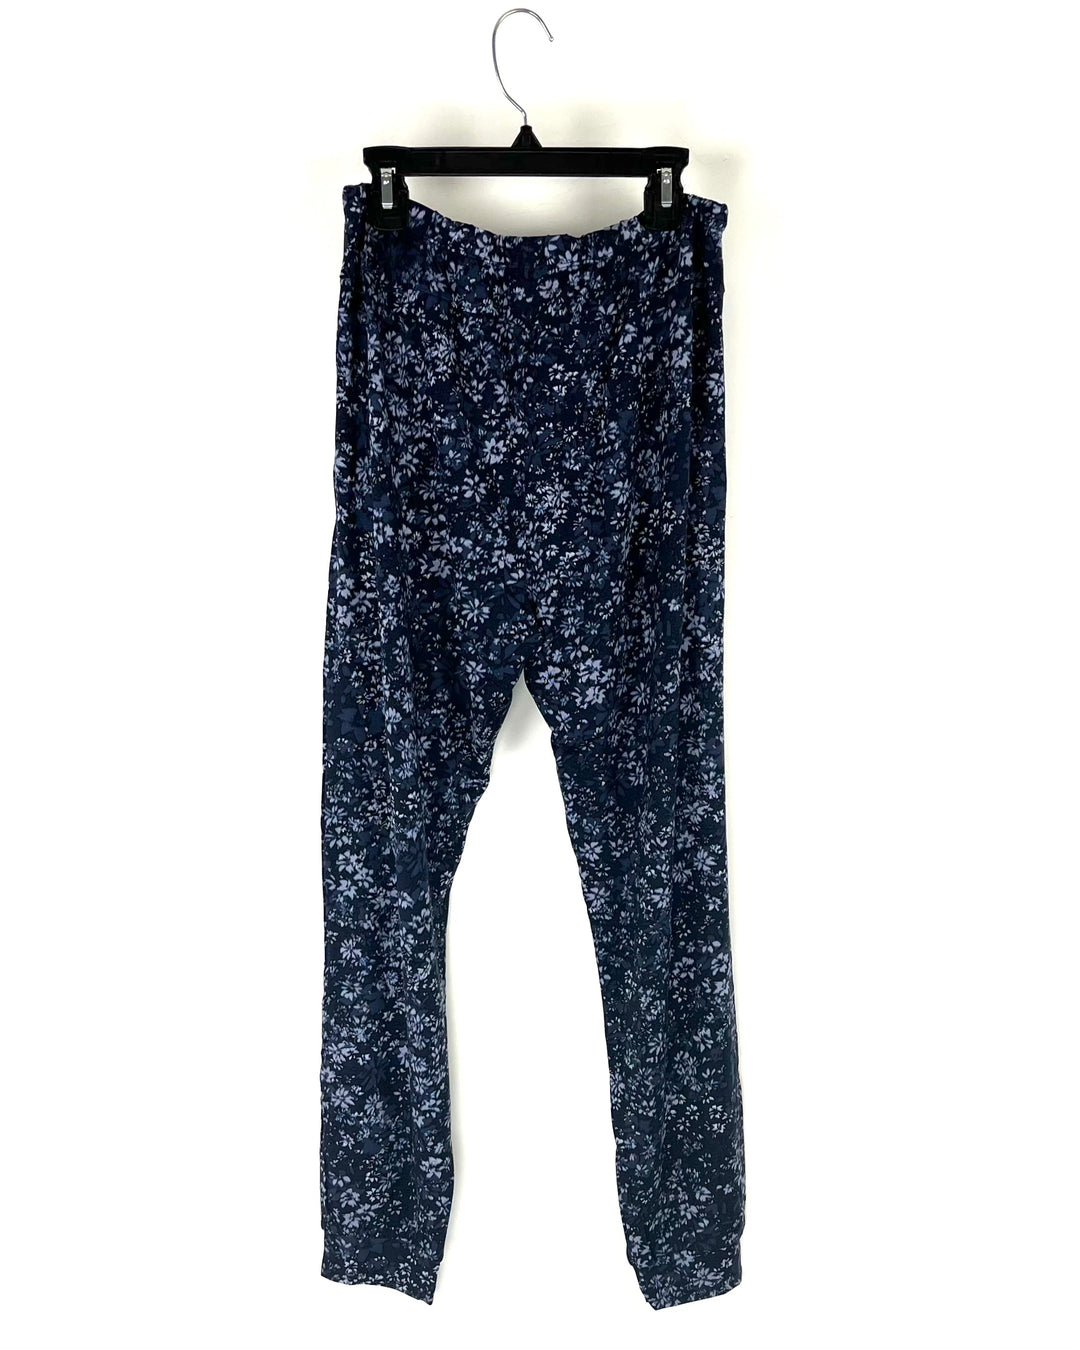 Blue Floral Pajama Set - Size 4/6